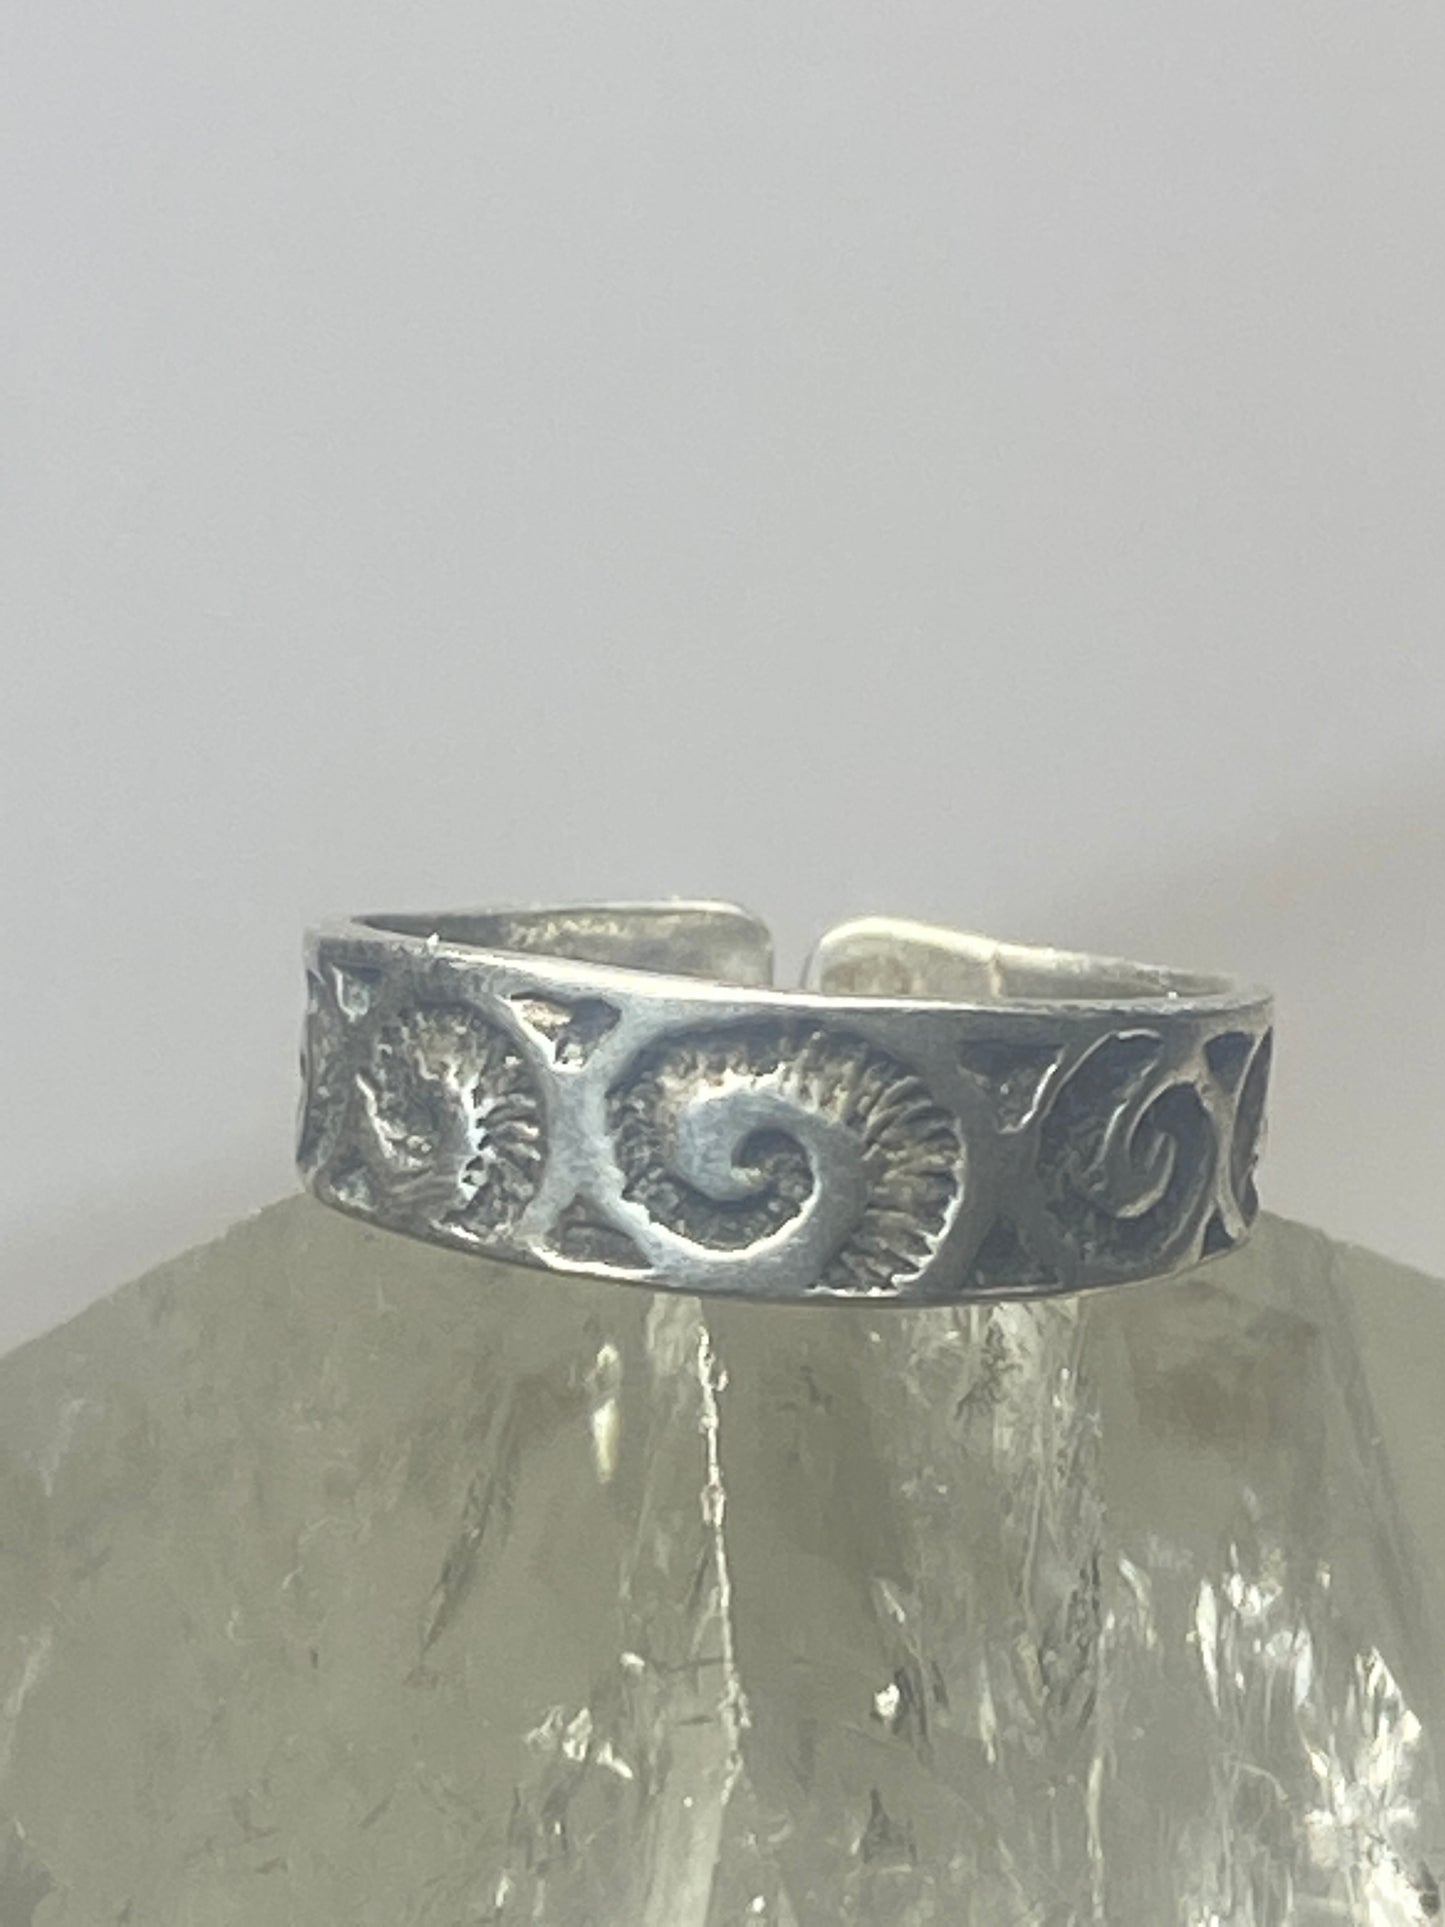 Toe ring spiral band sterling silver women girls